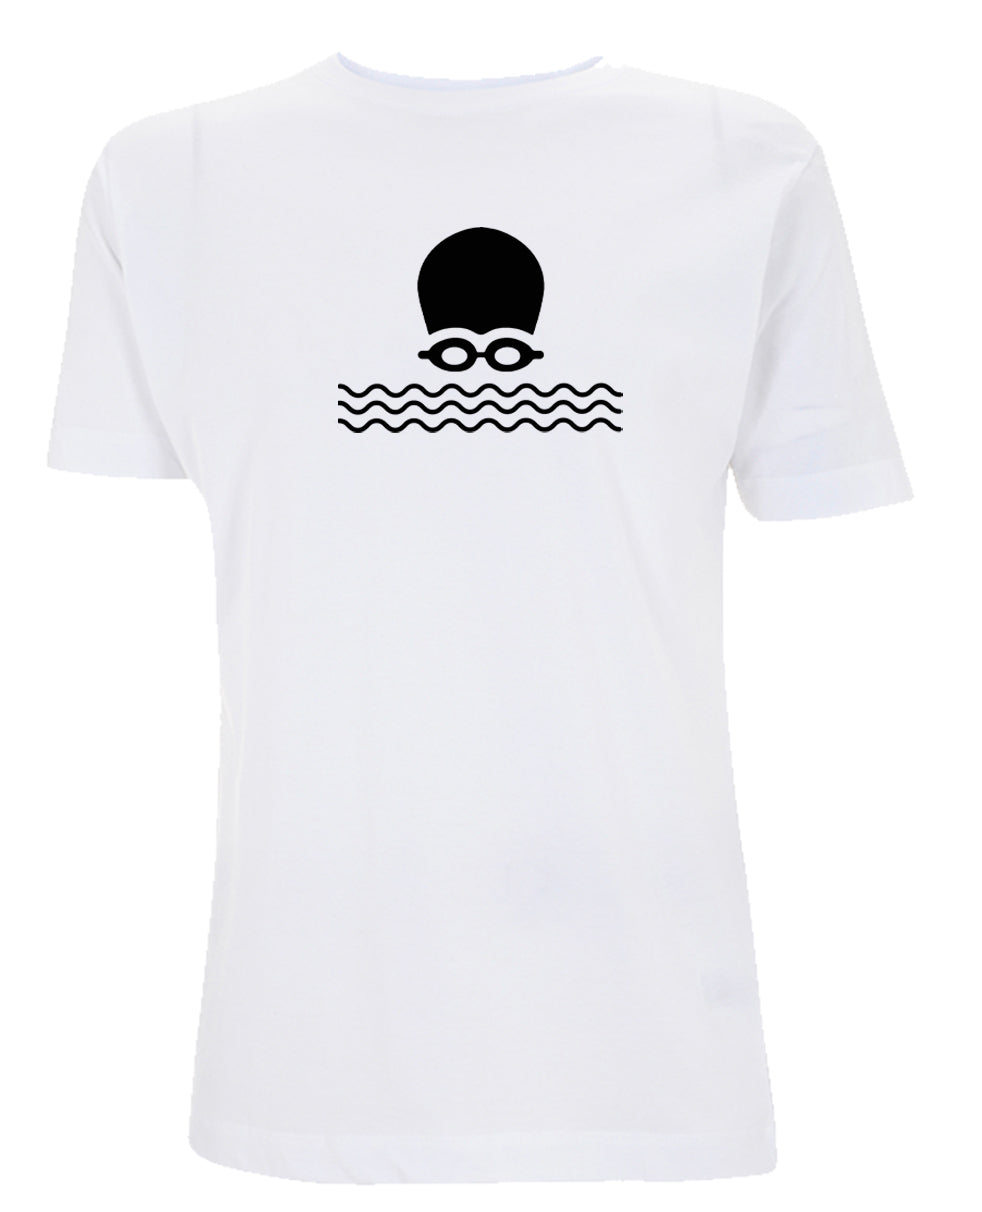 Open Water Swimming T-Shirt